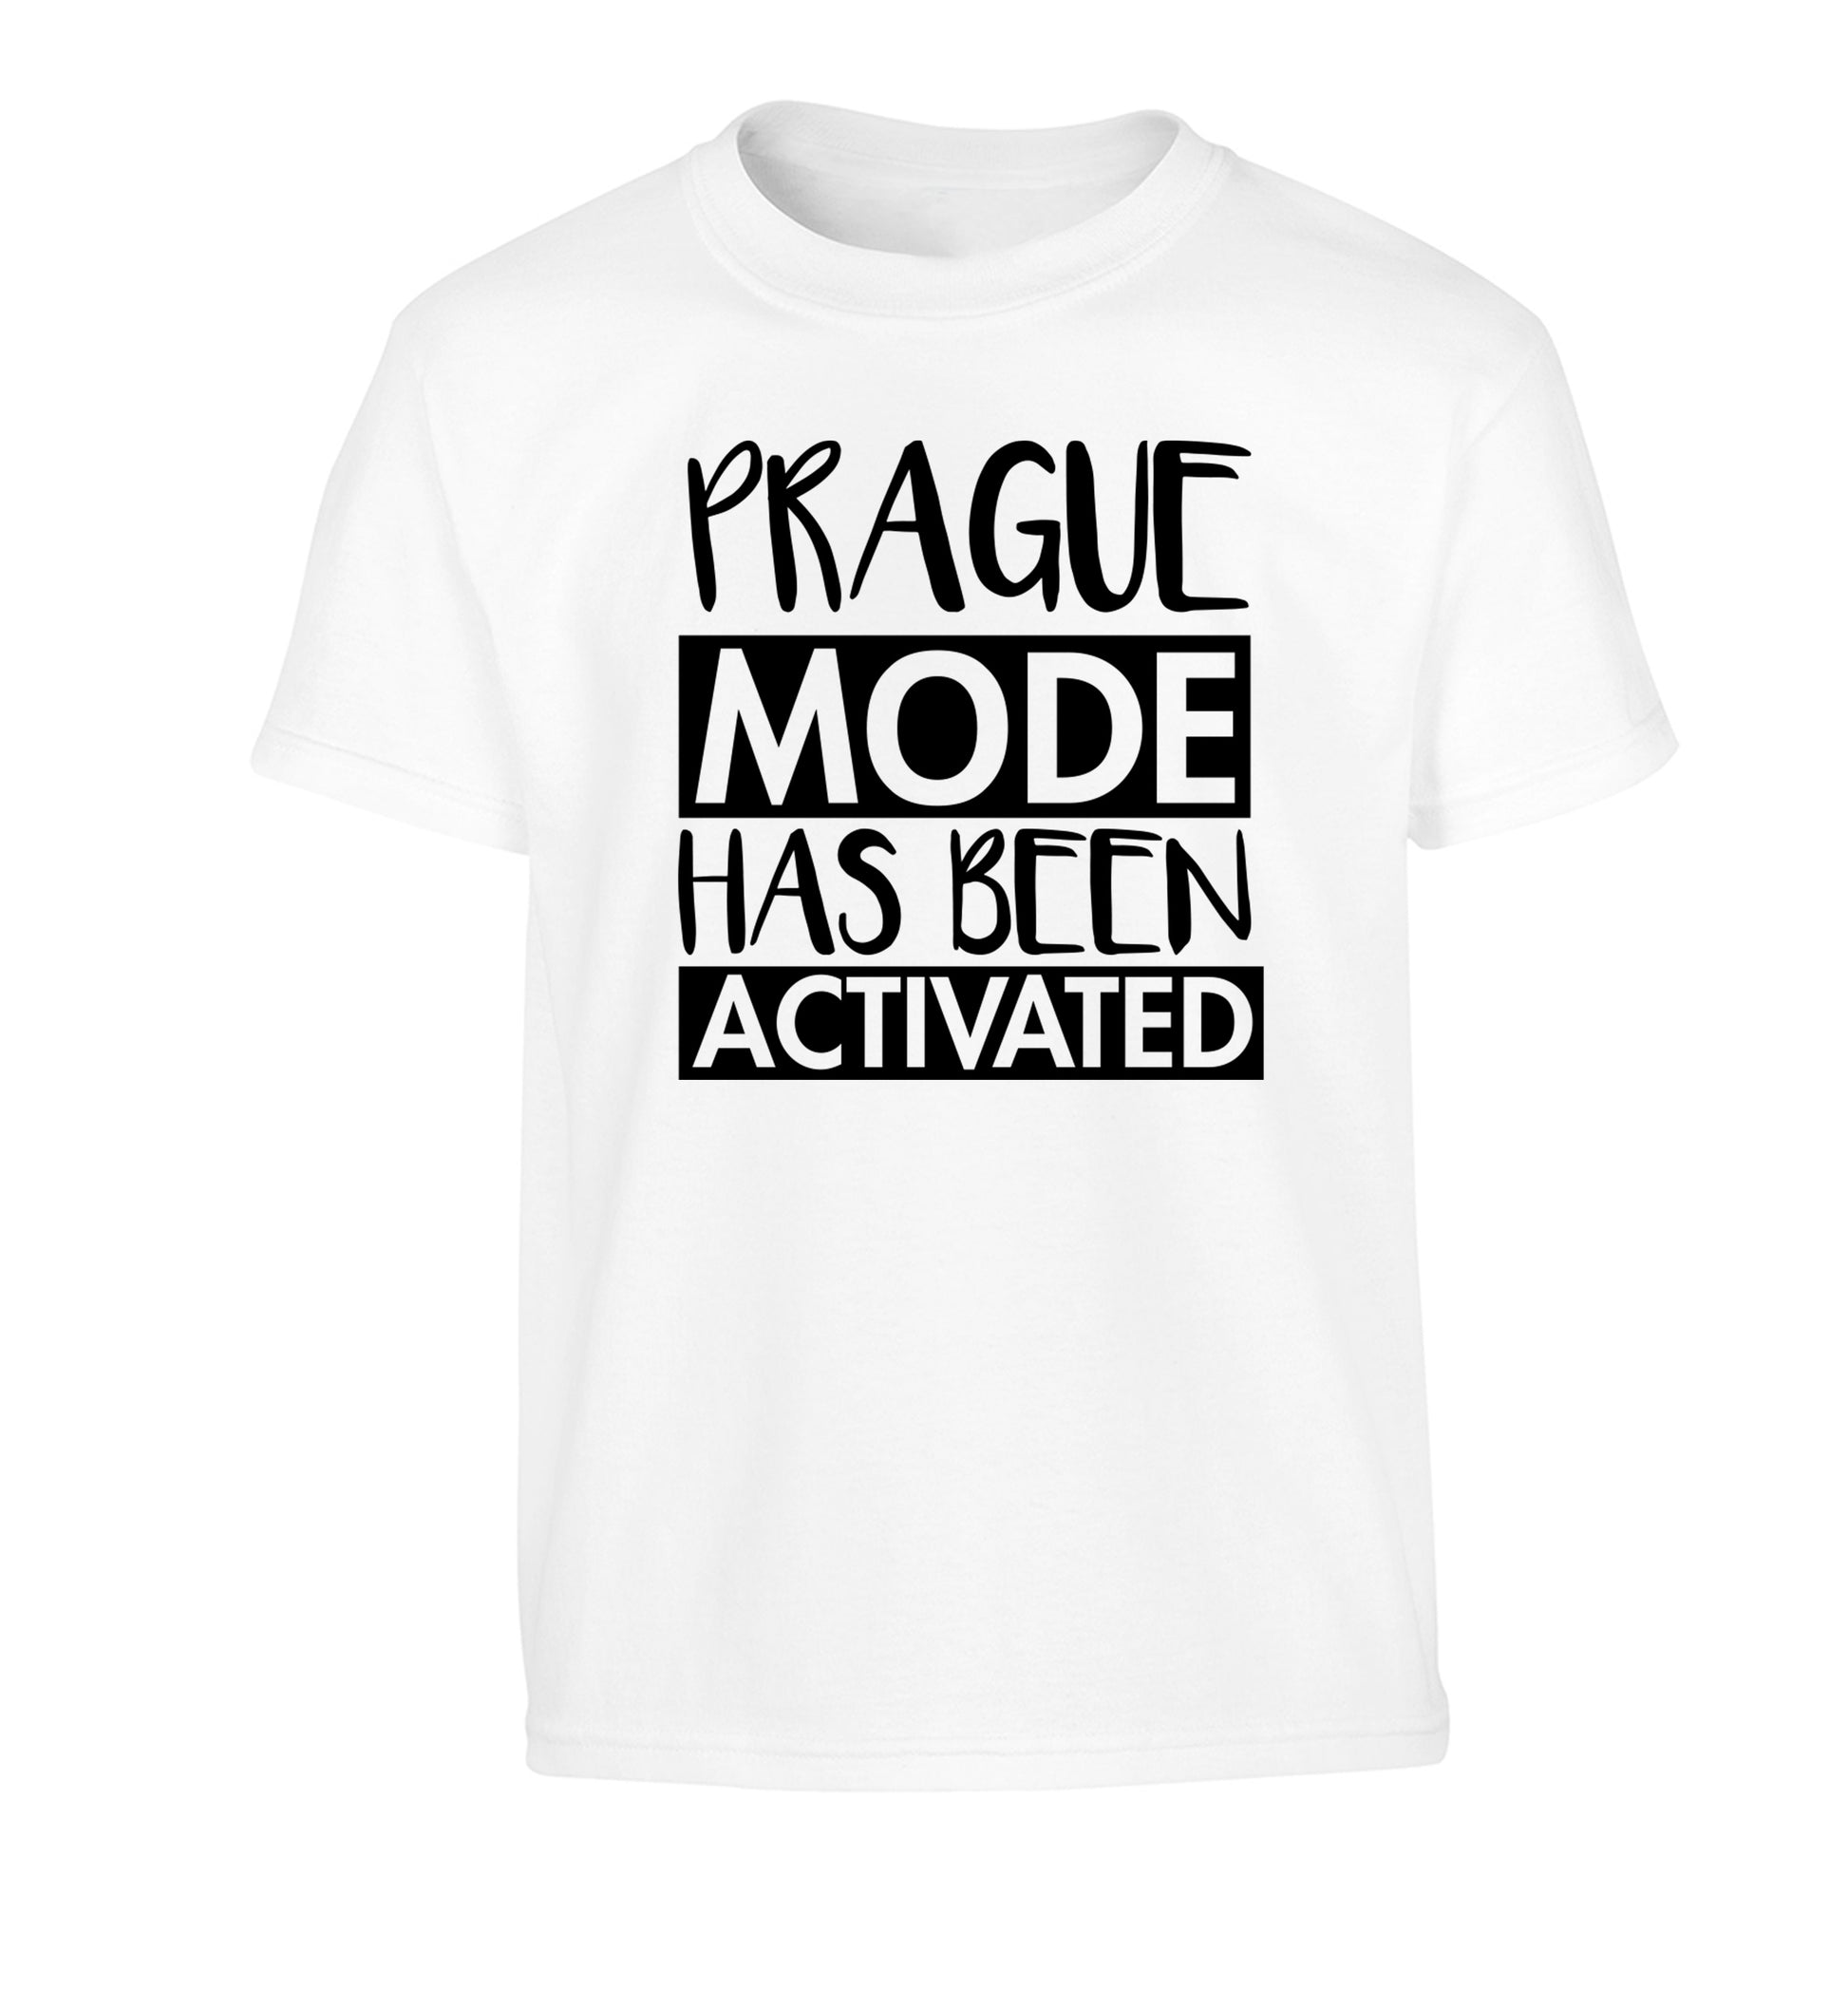 Prague mode has been activated Children's white Tshirt 12-13 Years